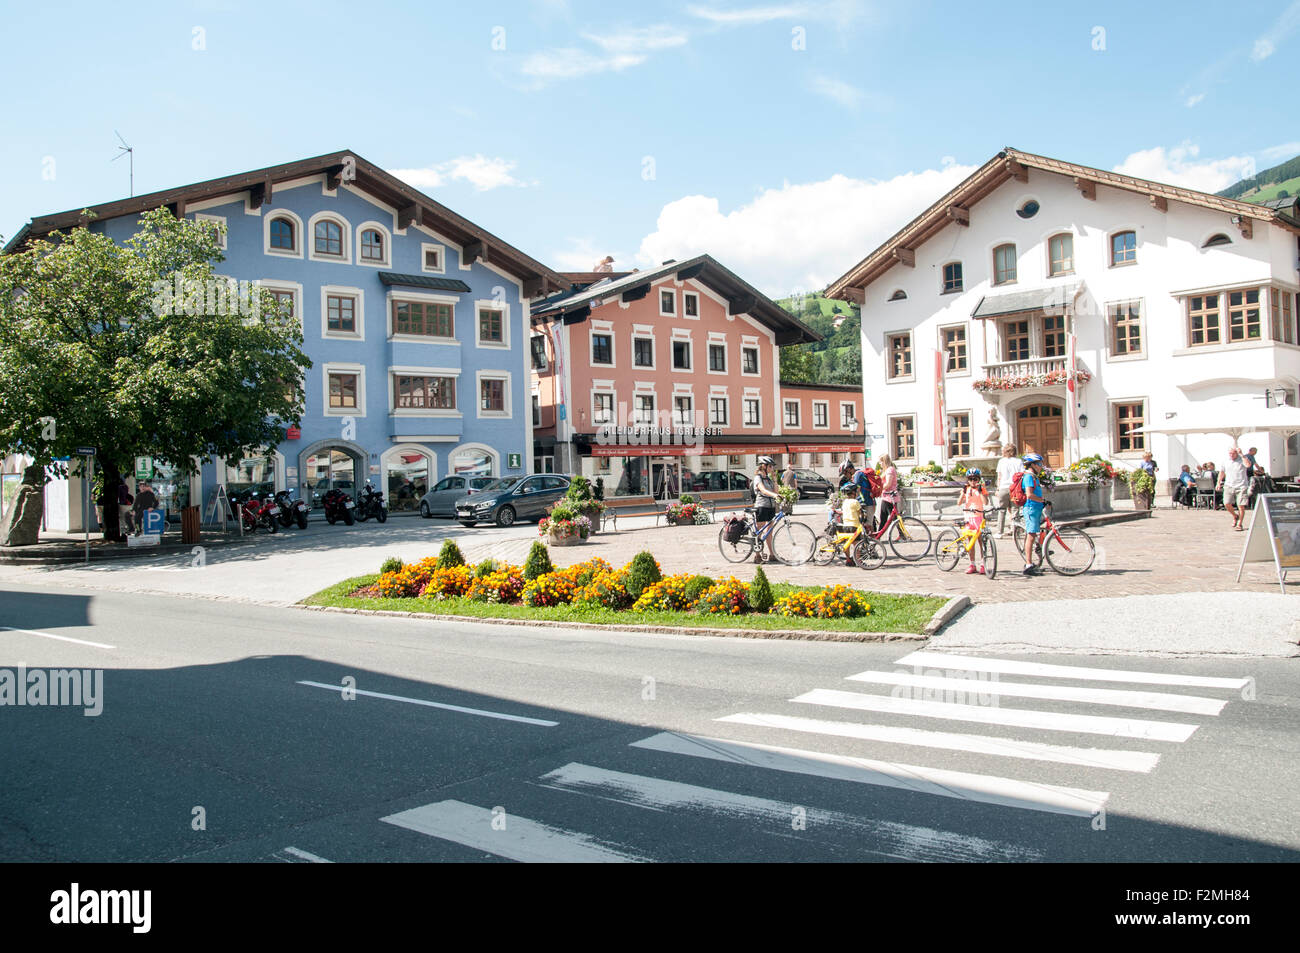 Austria, Tyrol, Mittersill town centre Stock Photo - Alamy